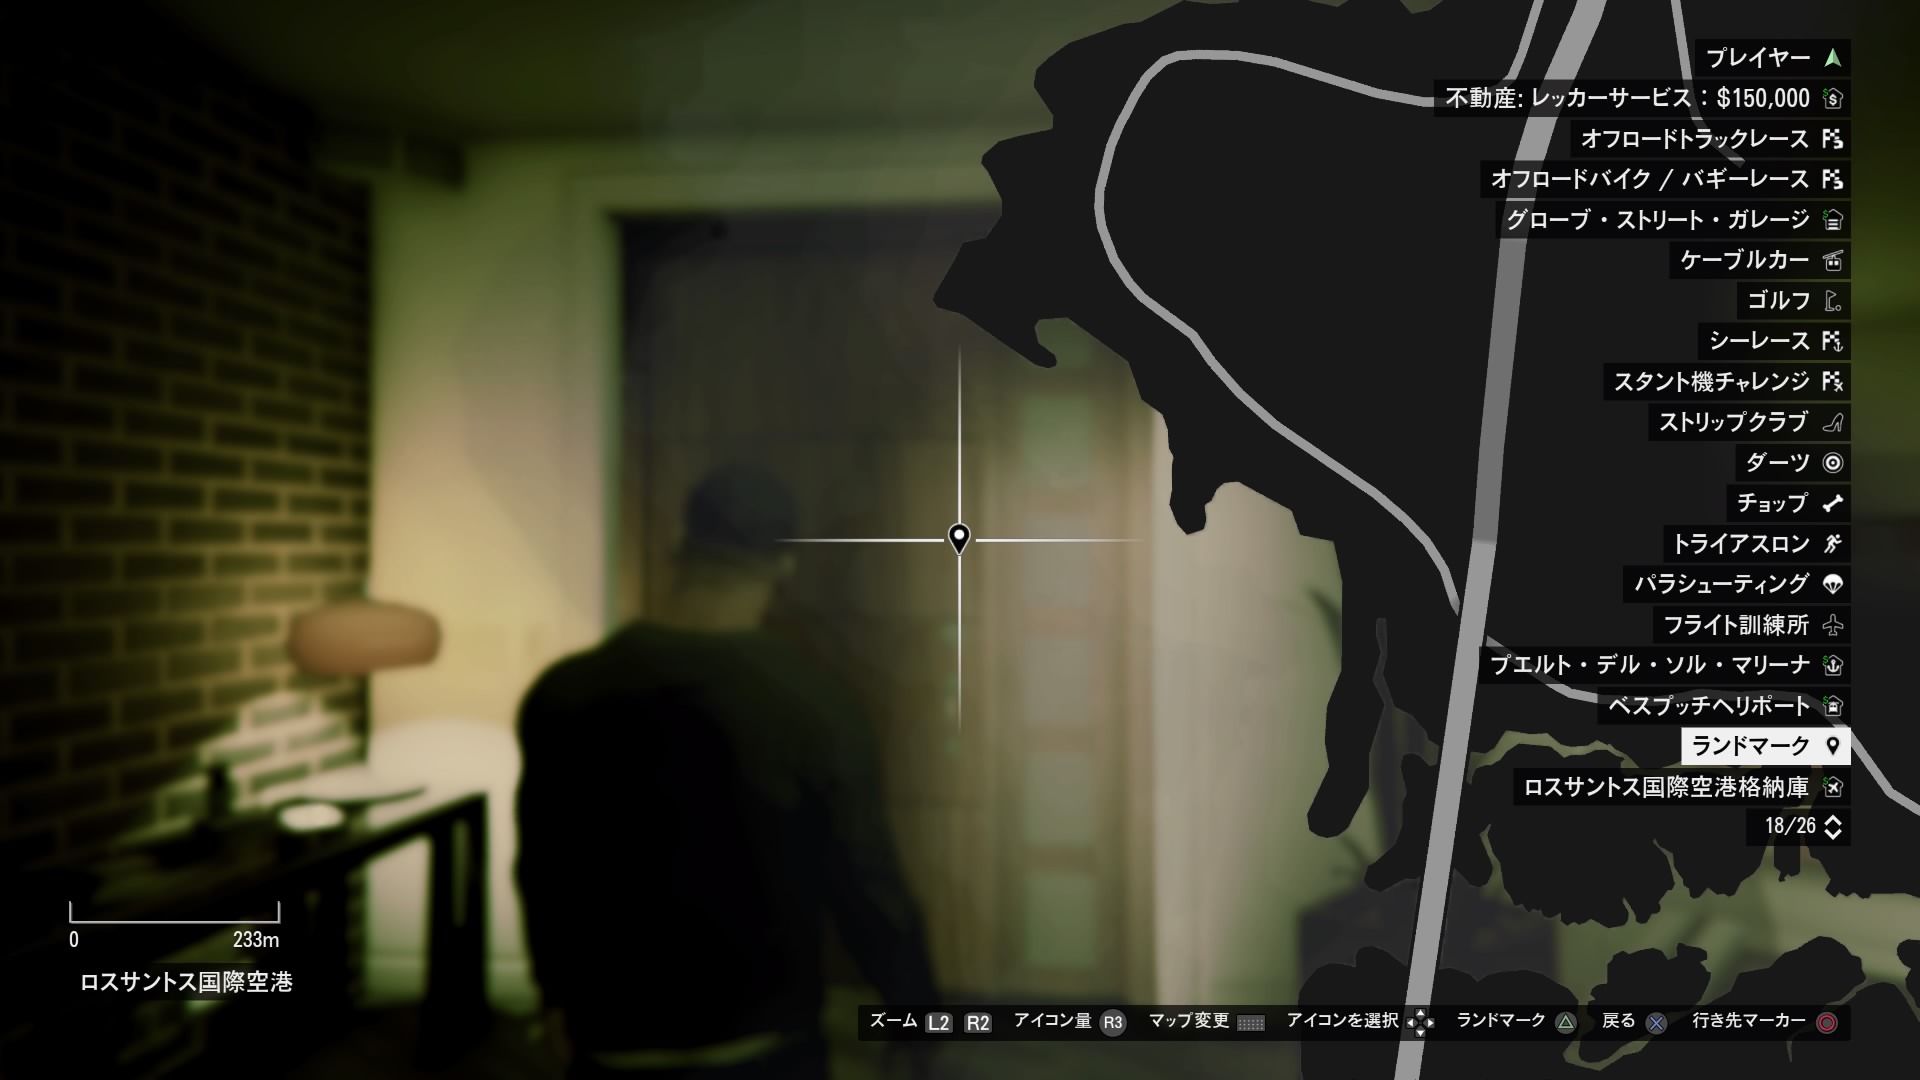 Murder Mystery Grand Theft Auto V グランドセフトオート5 Gta5攻略wiki Atwiki アットウィキ